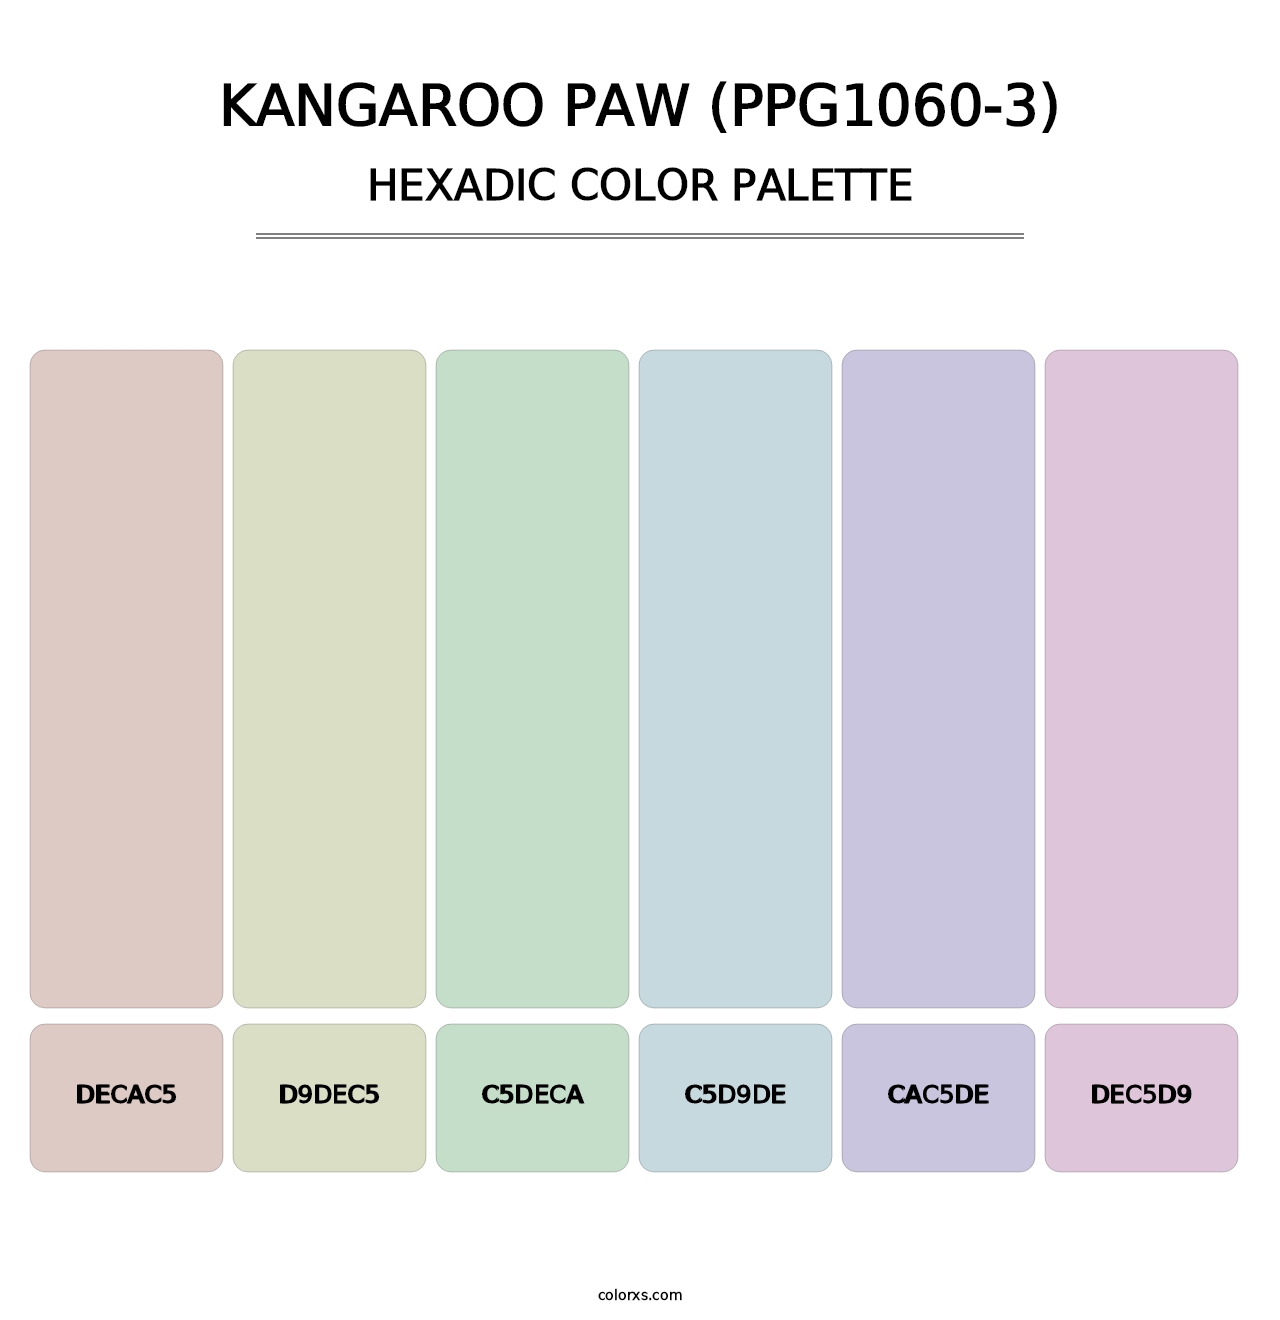 Kangaroo Paw (PPG1060-3) - Hexadic Color Palette